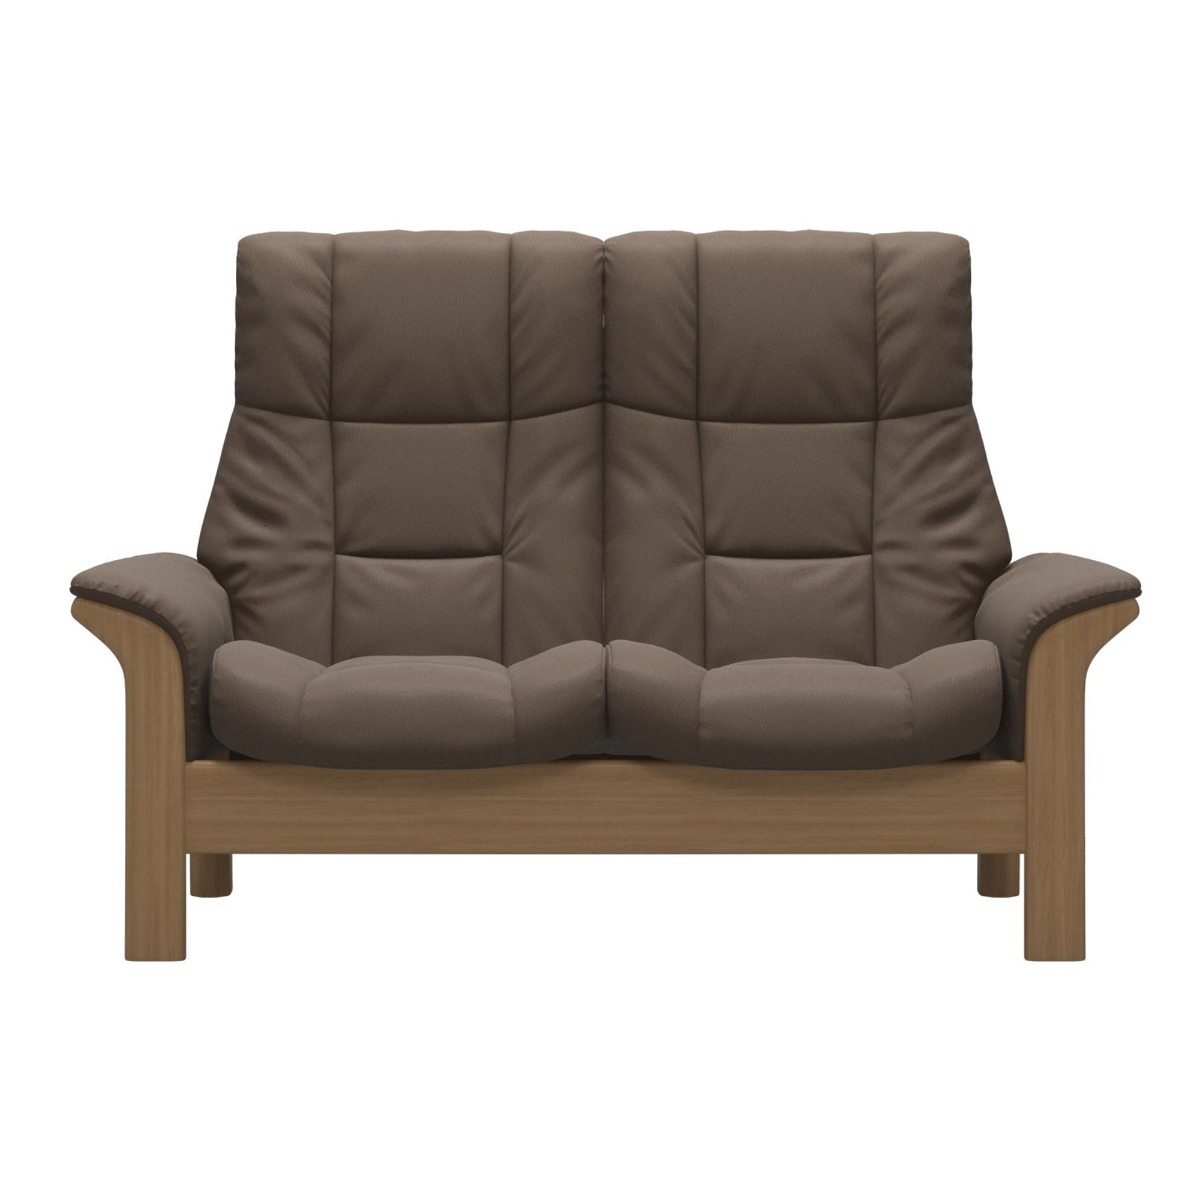 Stressless Windsor High Back 2 Seater Recliner Sofa, Brown Leather - Barker & Stonehouse - image 1